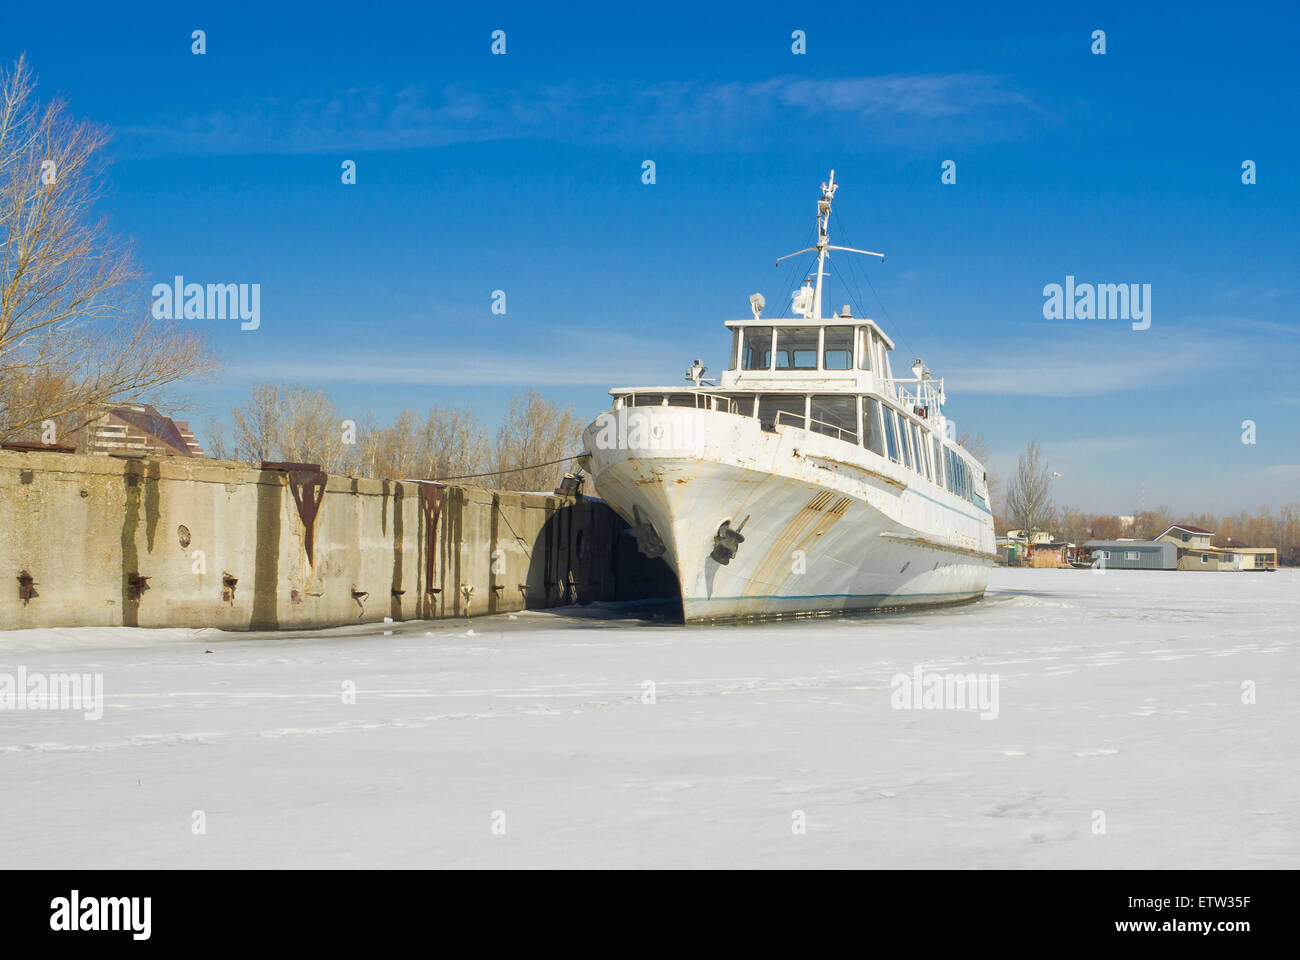 Retired pleasure boat on a winter berthing. Stock Photo